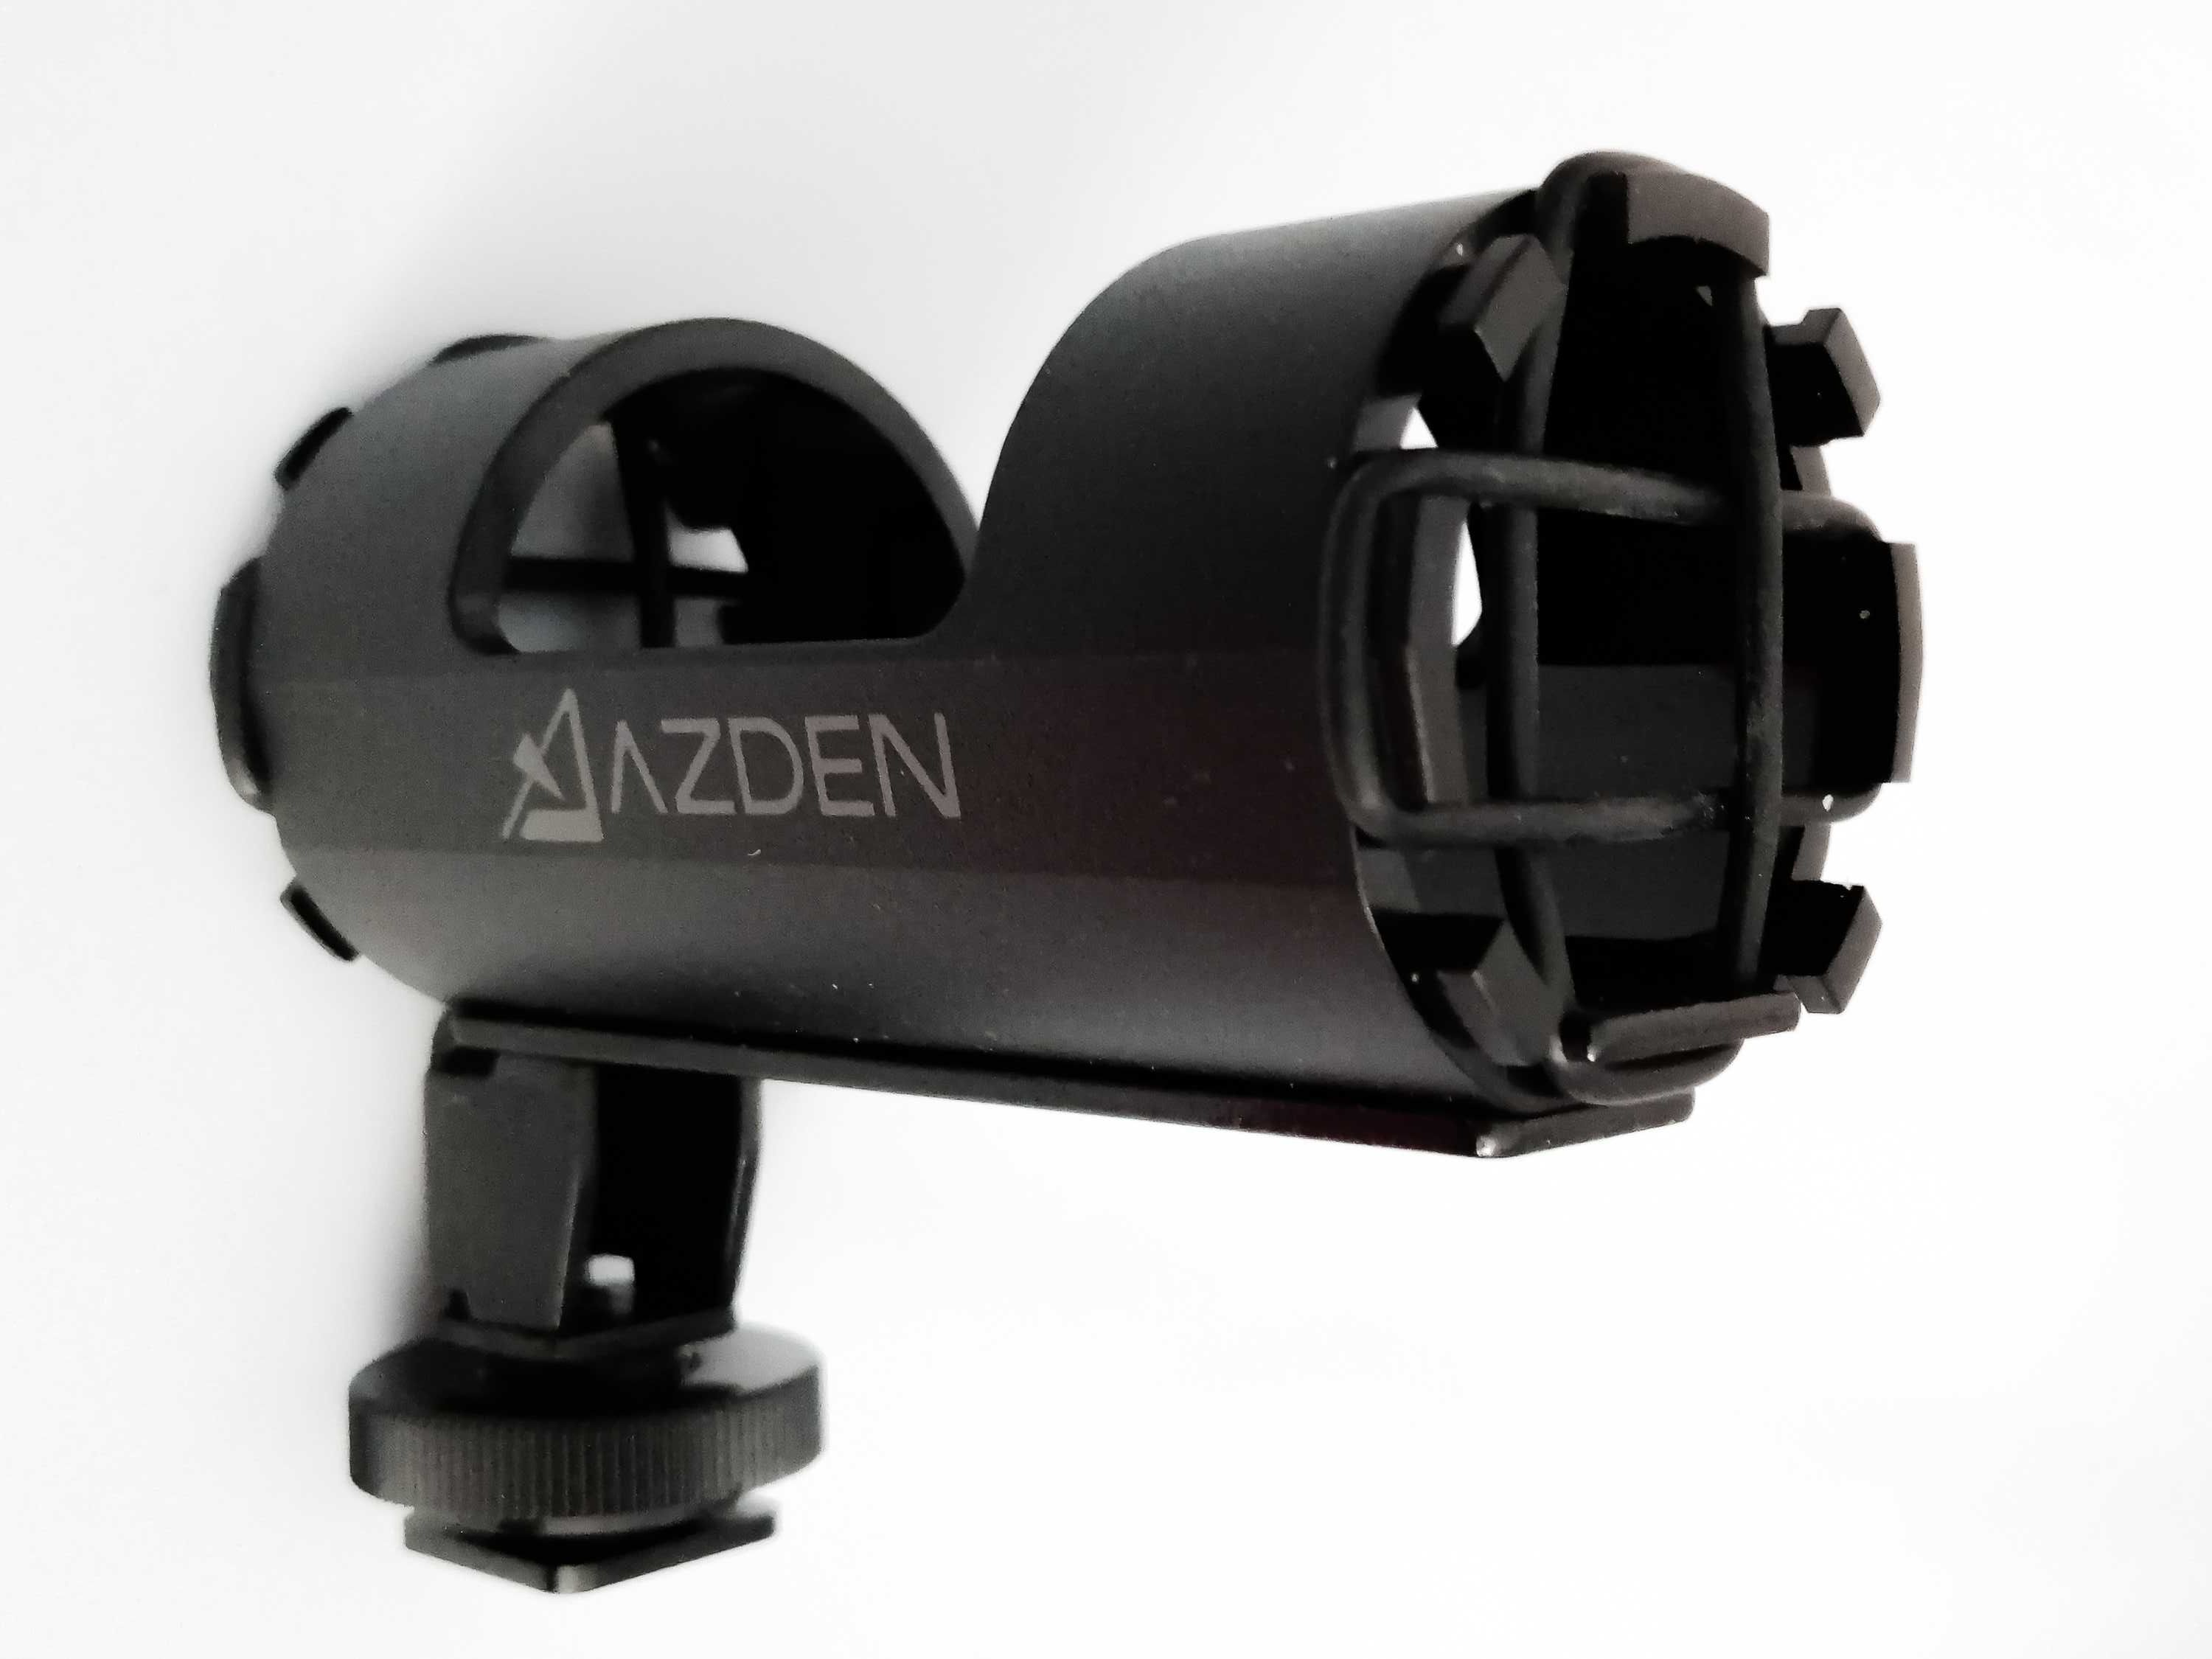 Microfon AZDEN SGM-2X cu 2 capsule omnidir si ShotGun